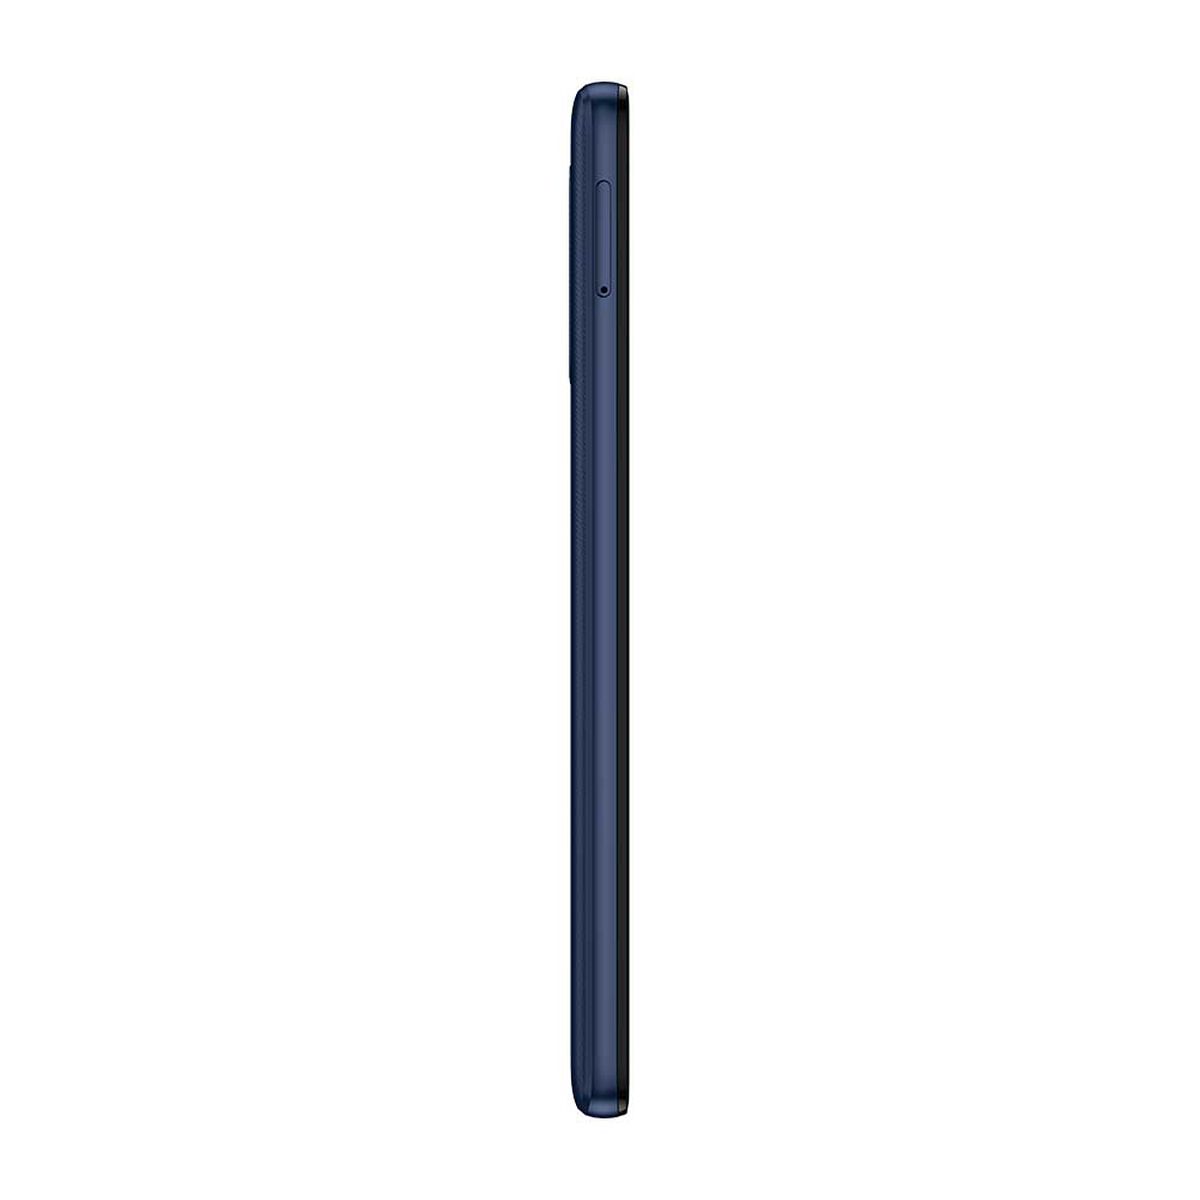 Celular Motorola Moto G60s 128GB 6,8" Azul Wom